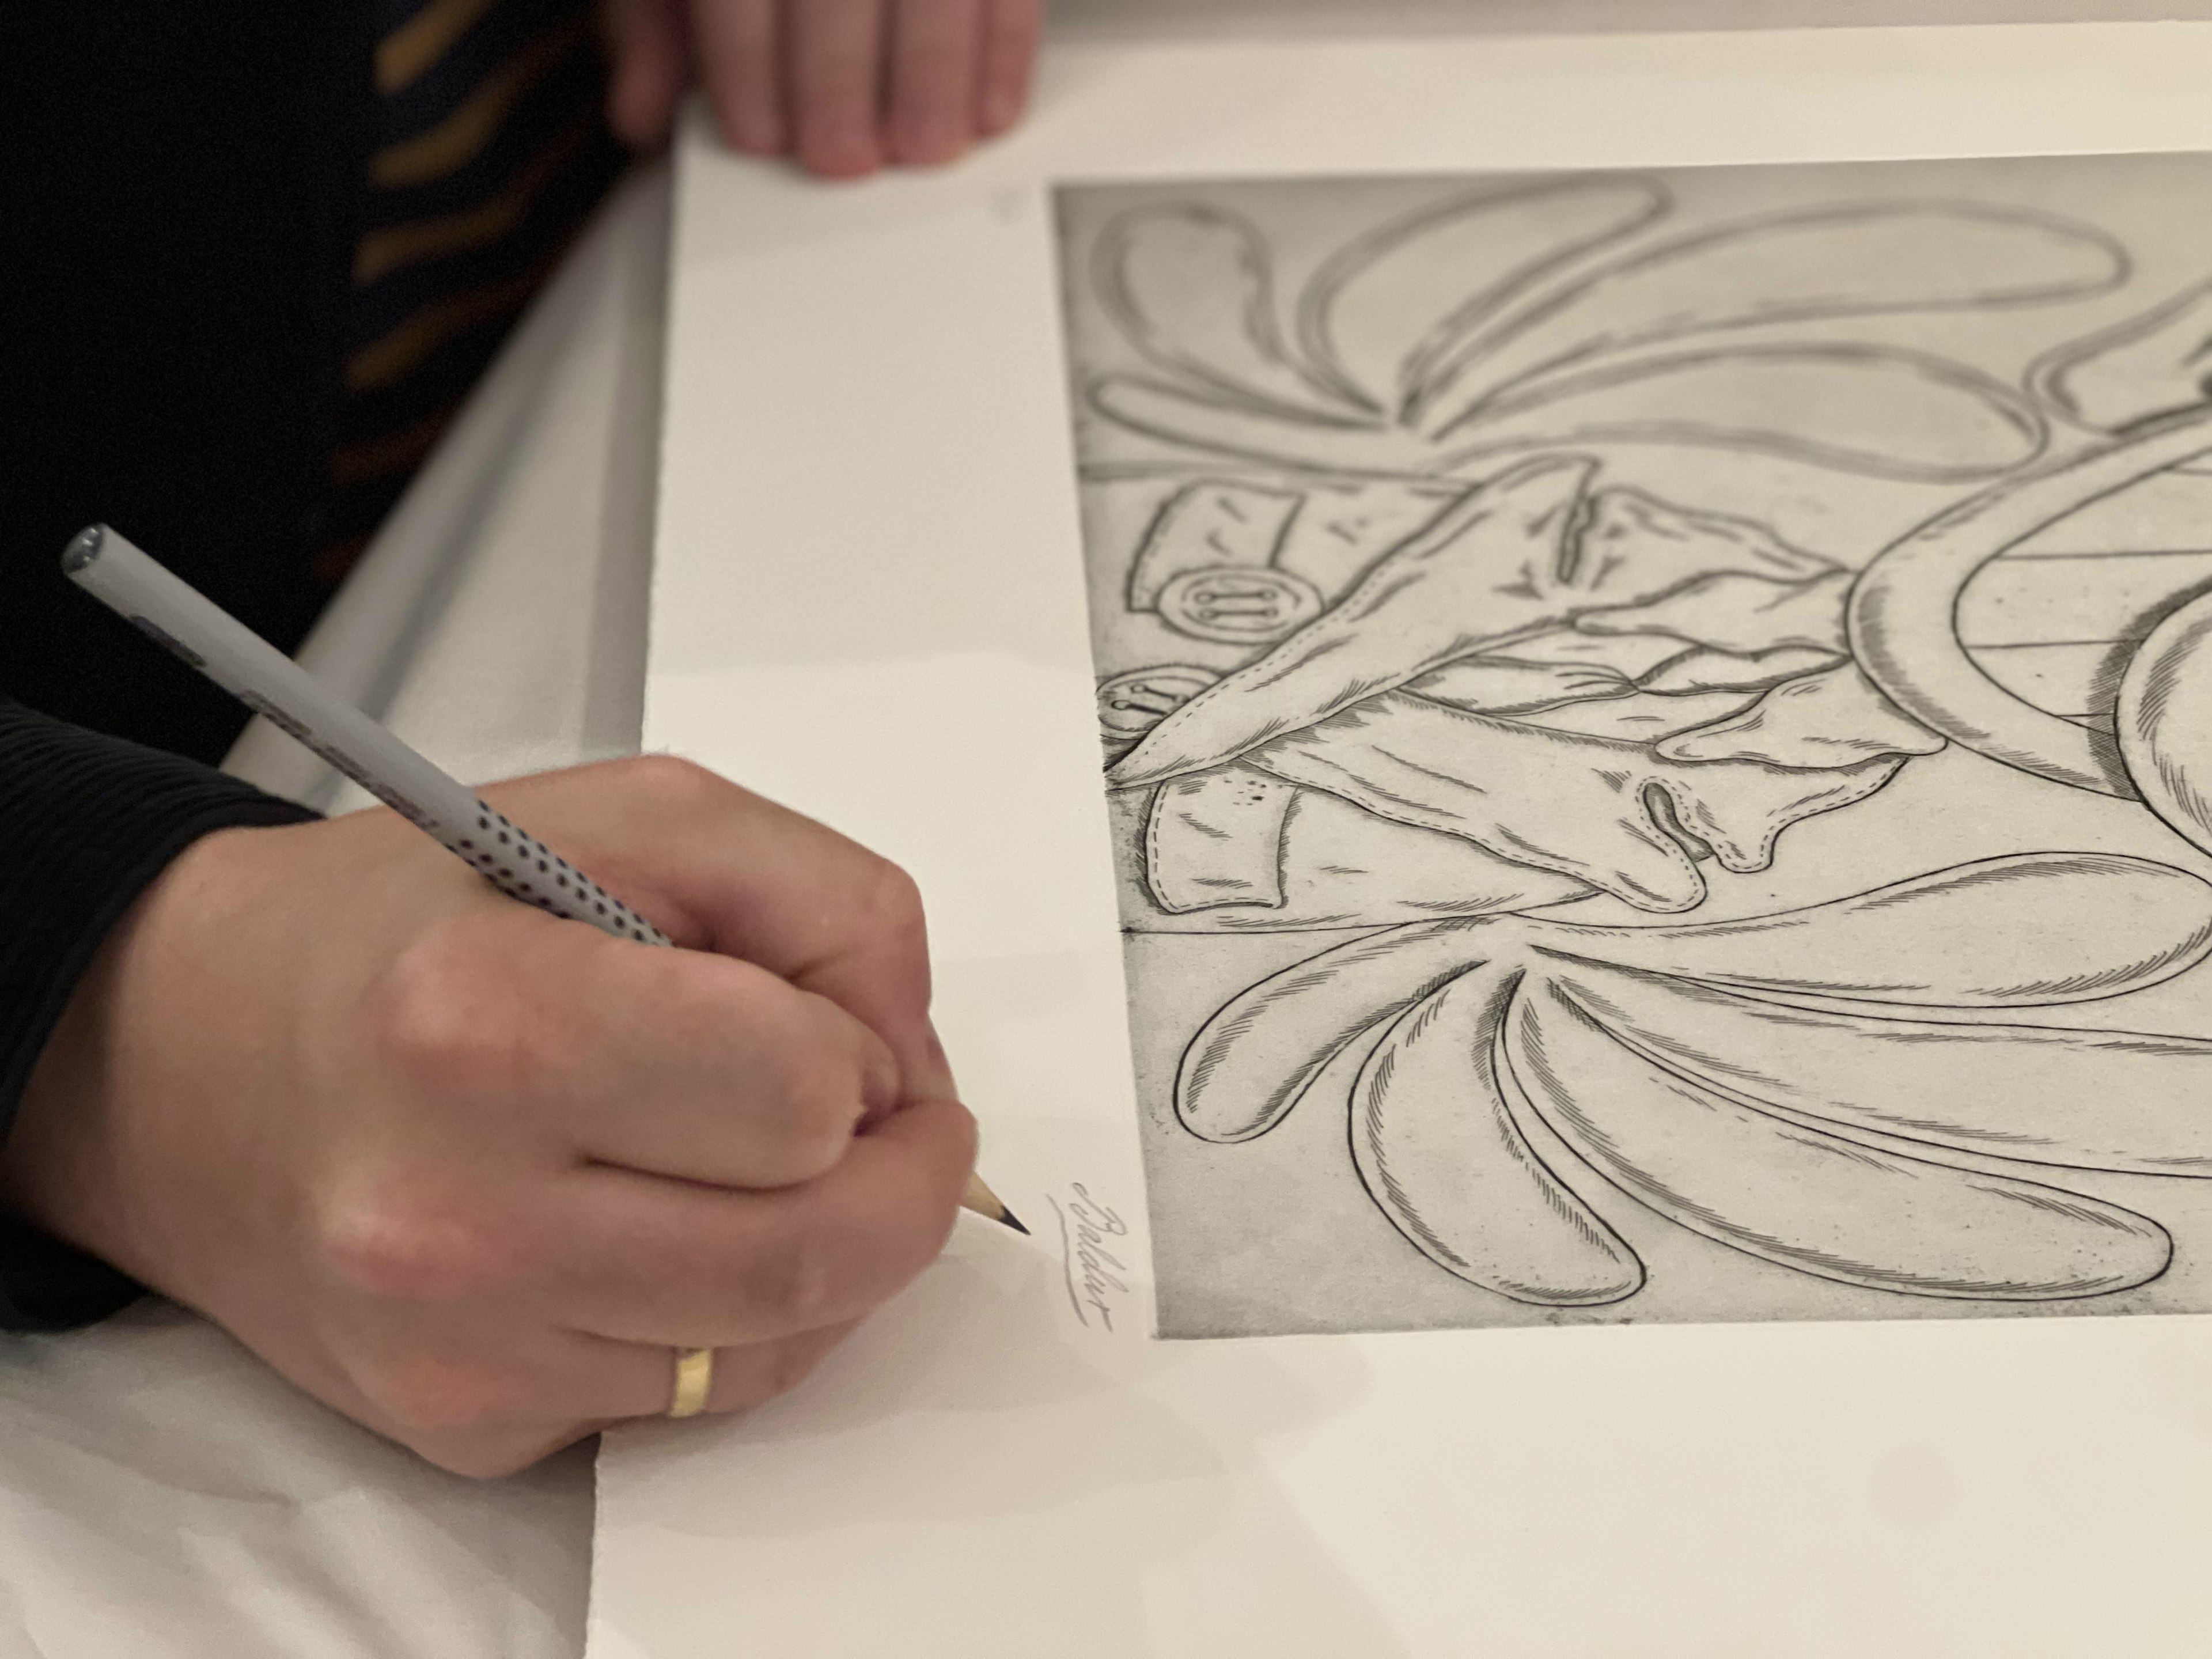 Collective Post - Baldur Helgason turns his hand to etching 🖋